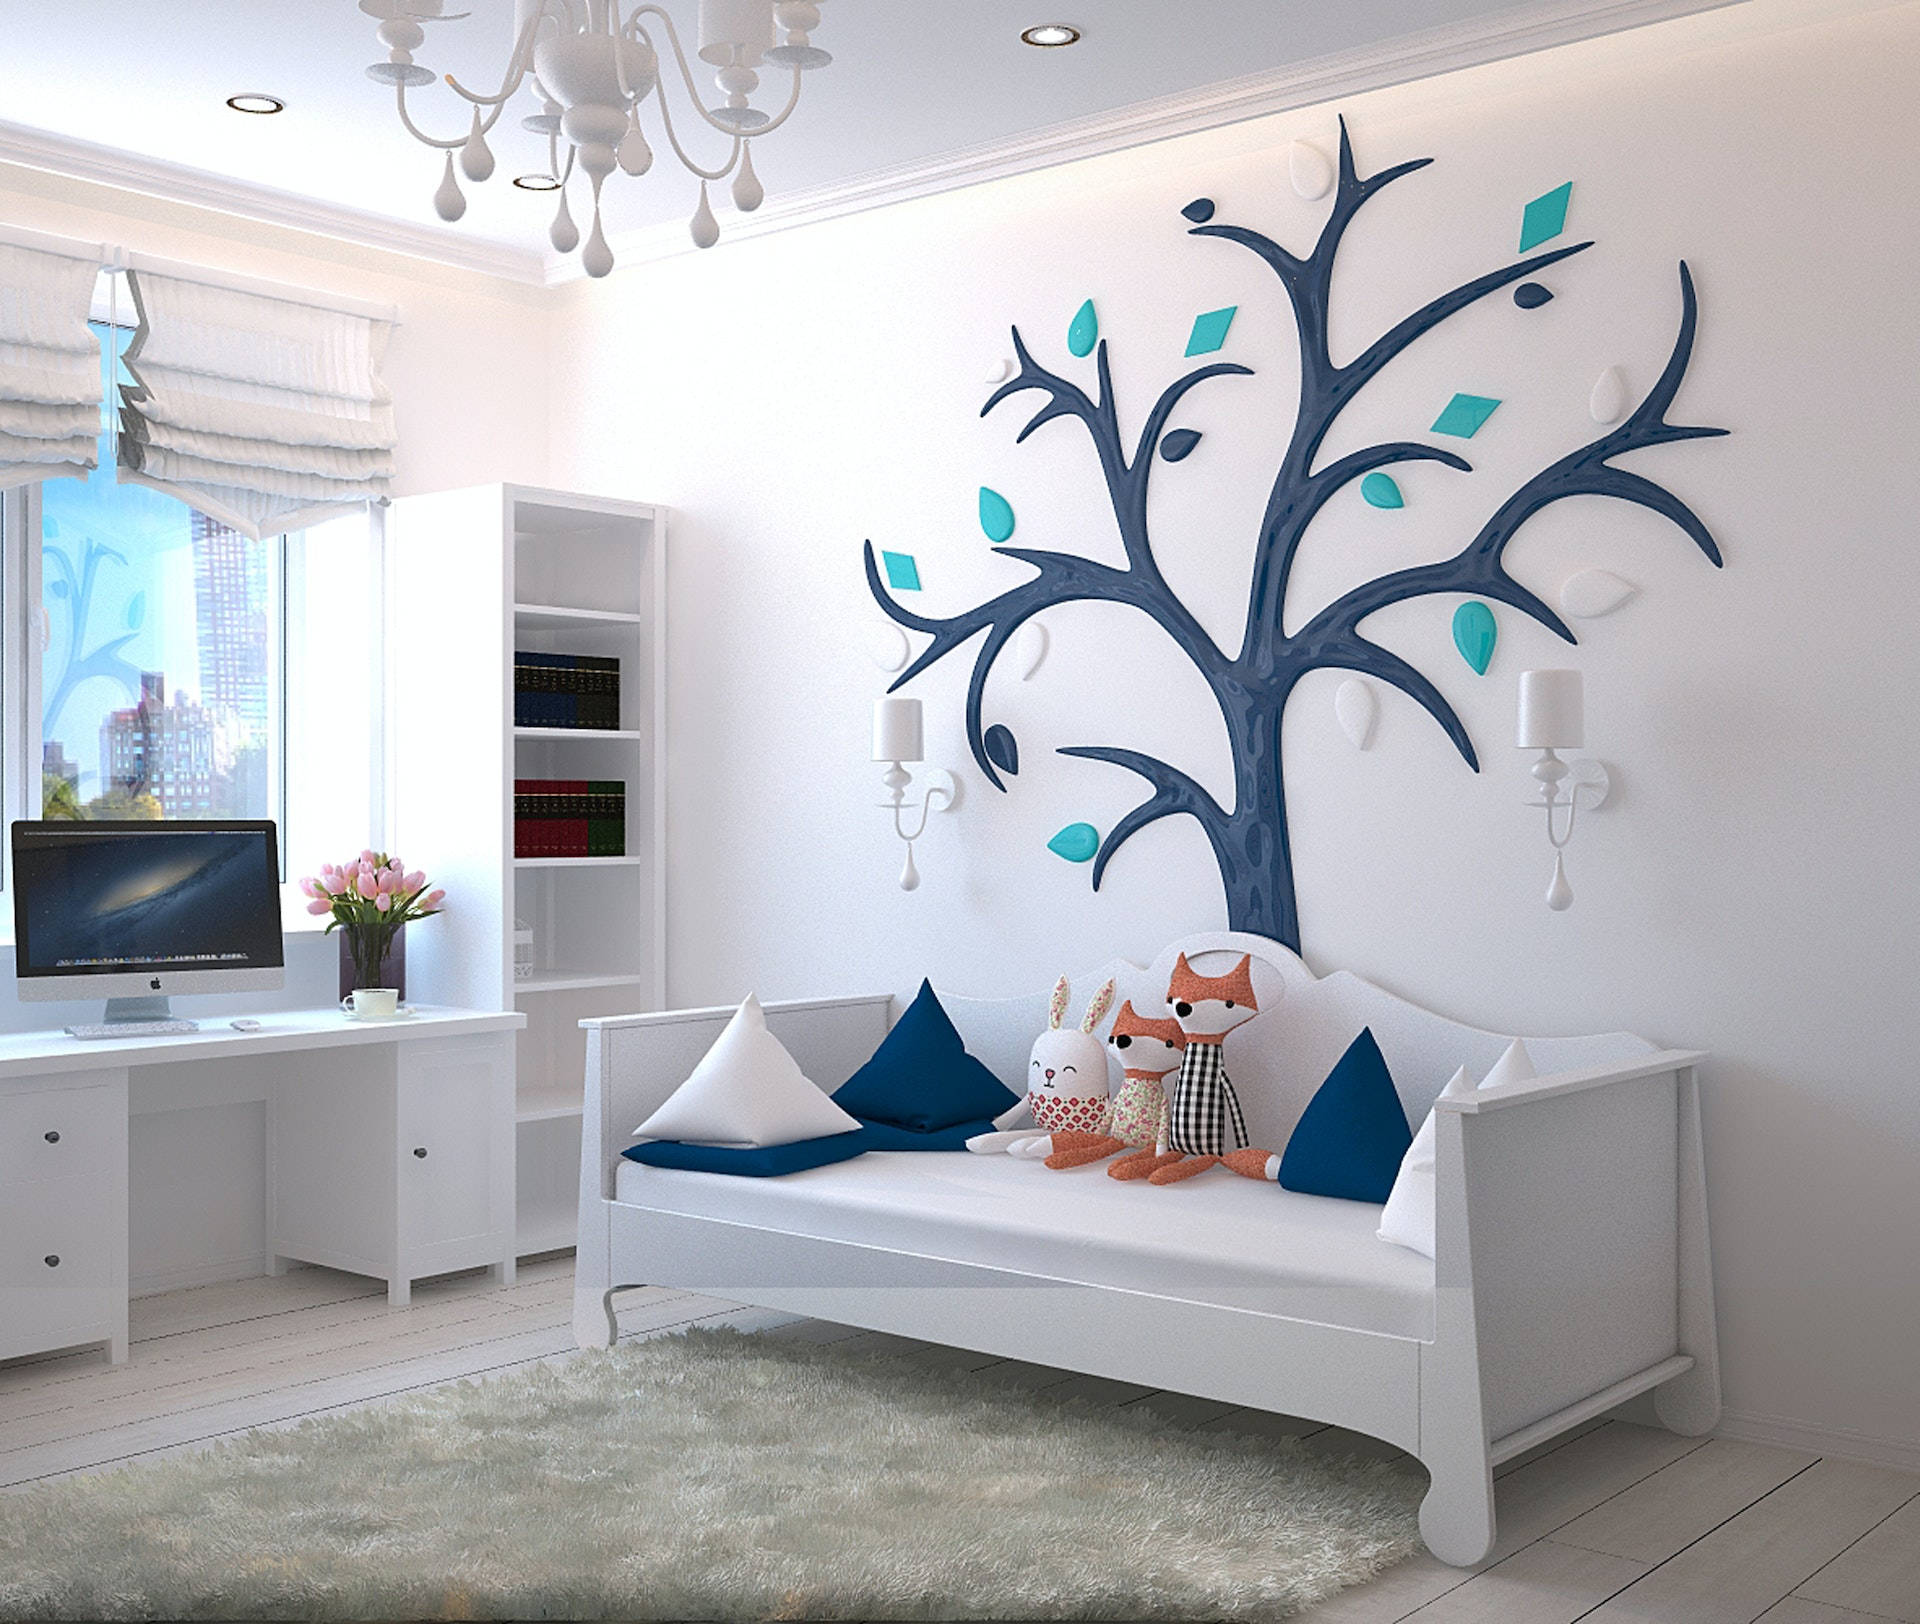 Enchanting And Fun Kids Bedroom